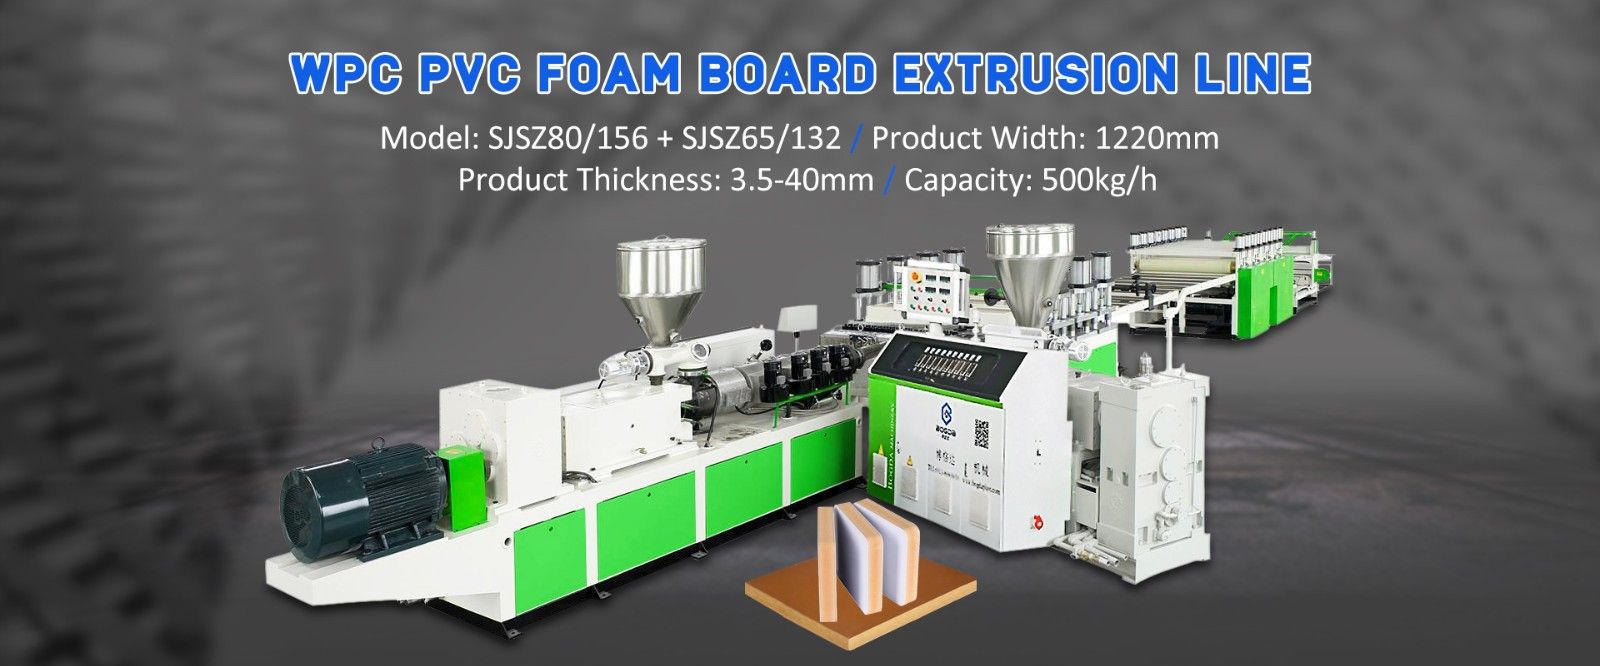 WPC PVC Foam Board Extrusion Line